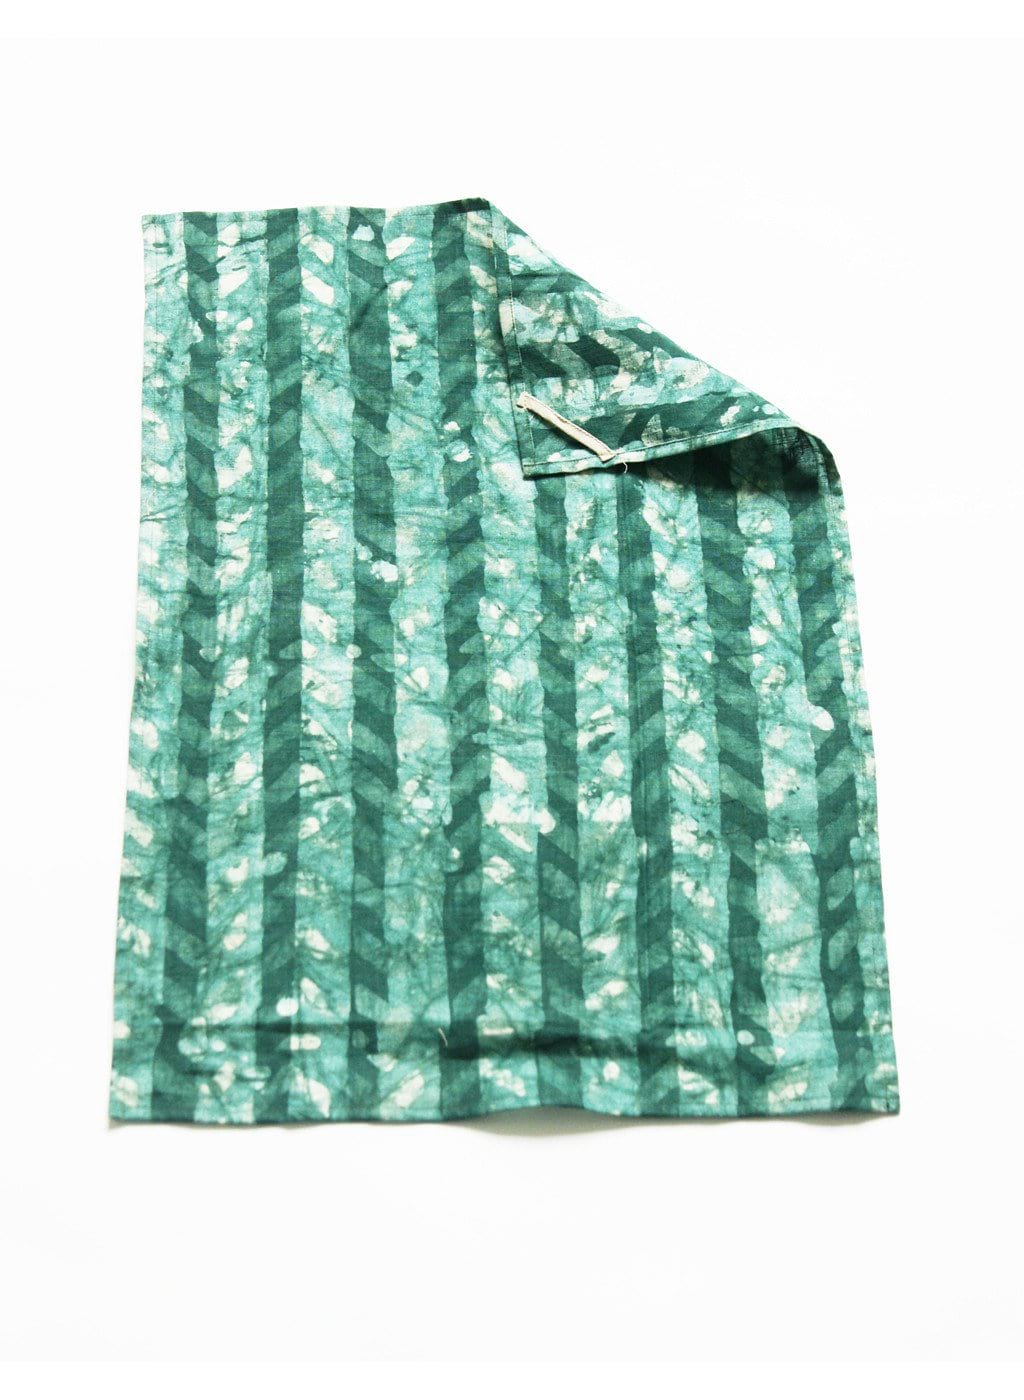 SOLD OUT Emerald Green Chevron Linen Kitchen Tea Towel Handprinted Batik